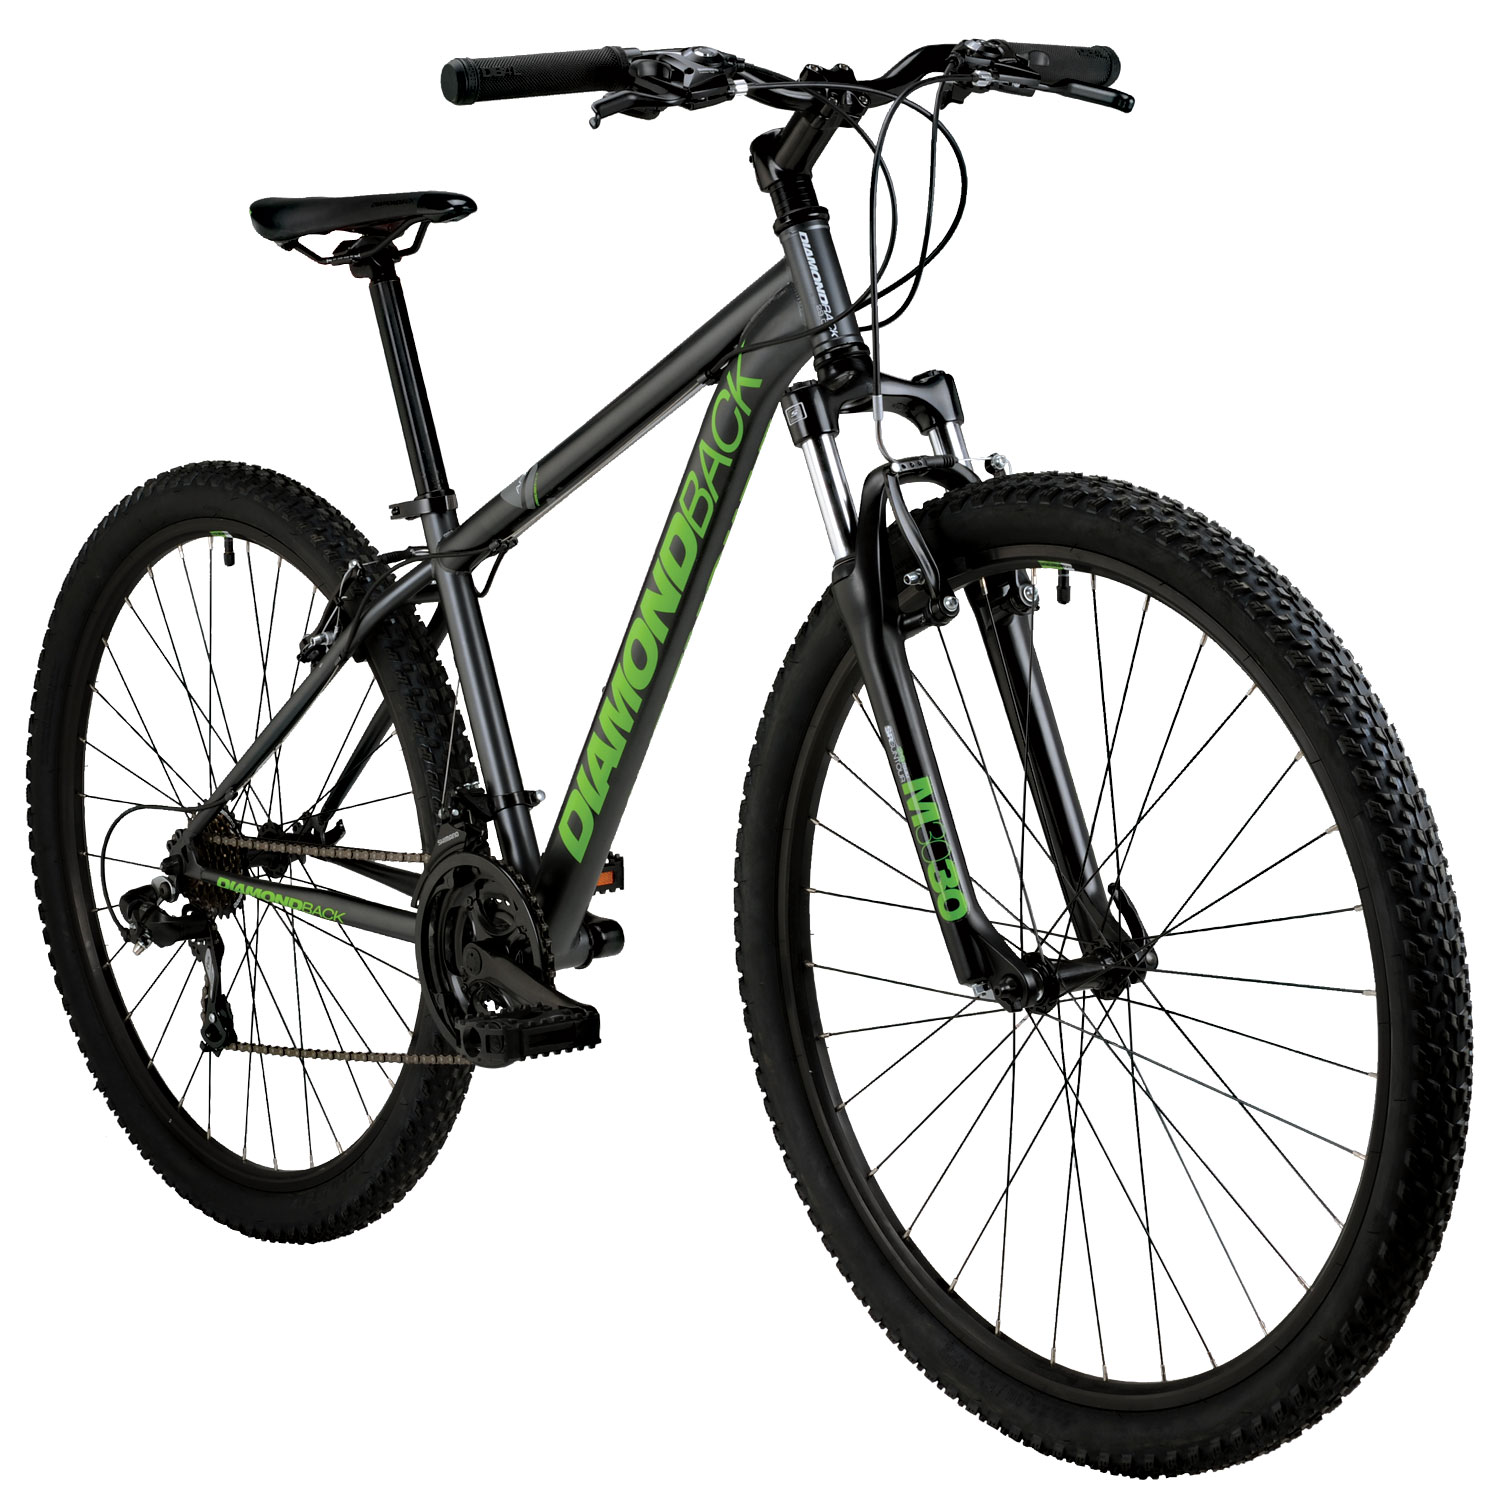 Diamondback велосипед e777. Specialized Tricross Sport 2015. Велосипед Apex. Маунтин байк 4.7. Велосипед цена качество 2023